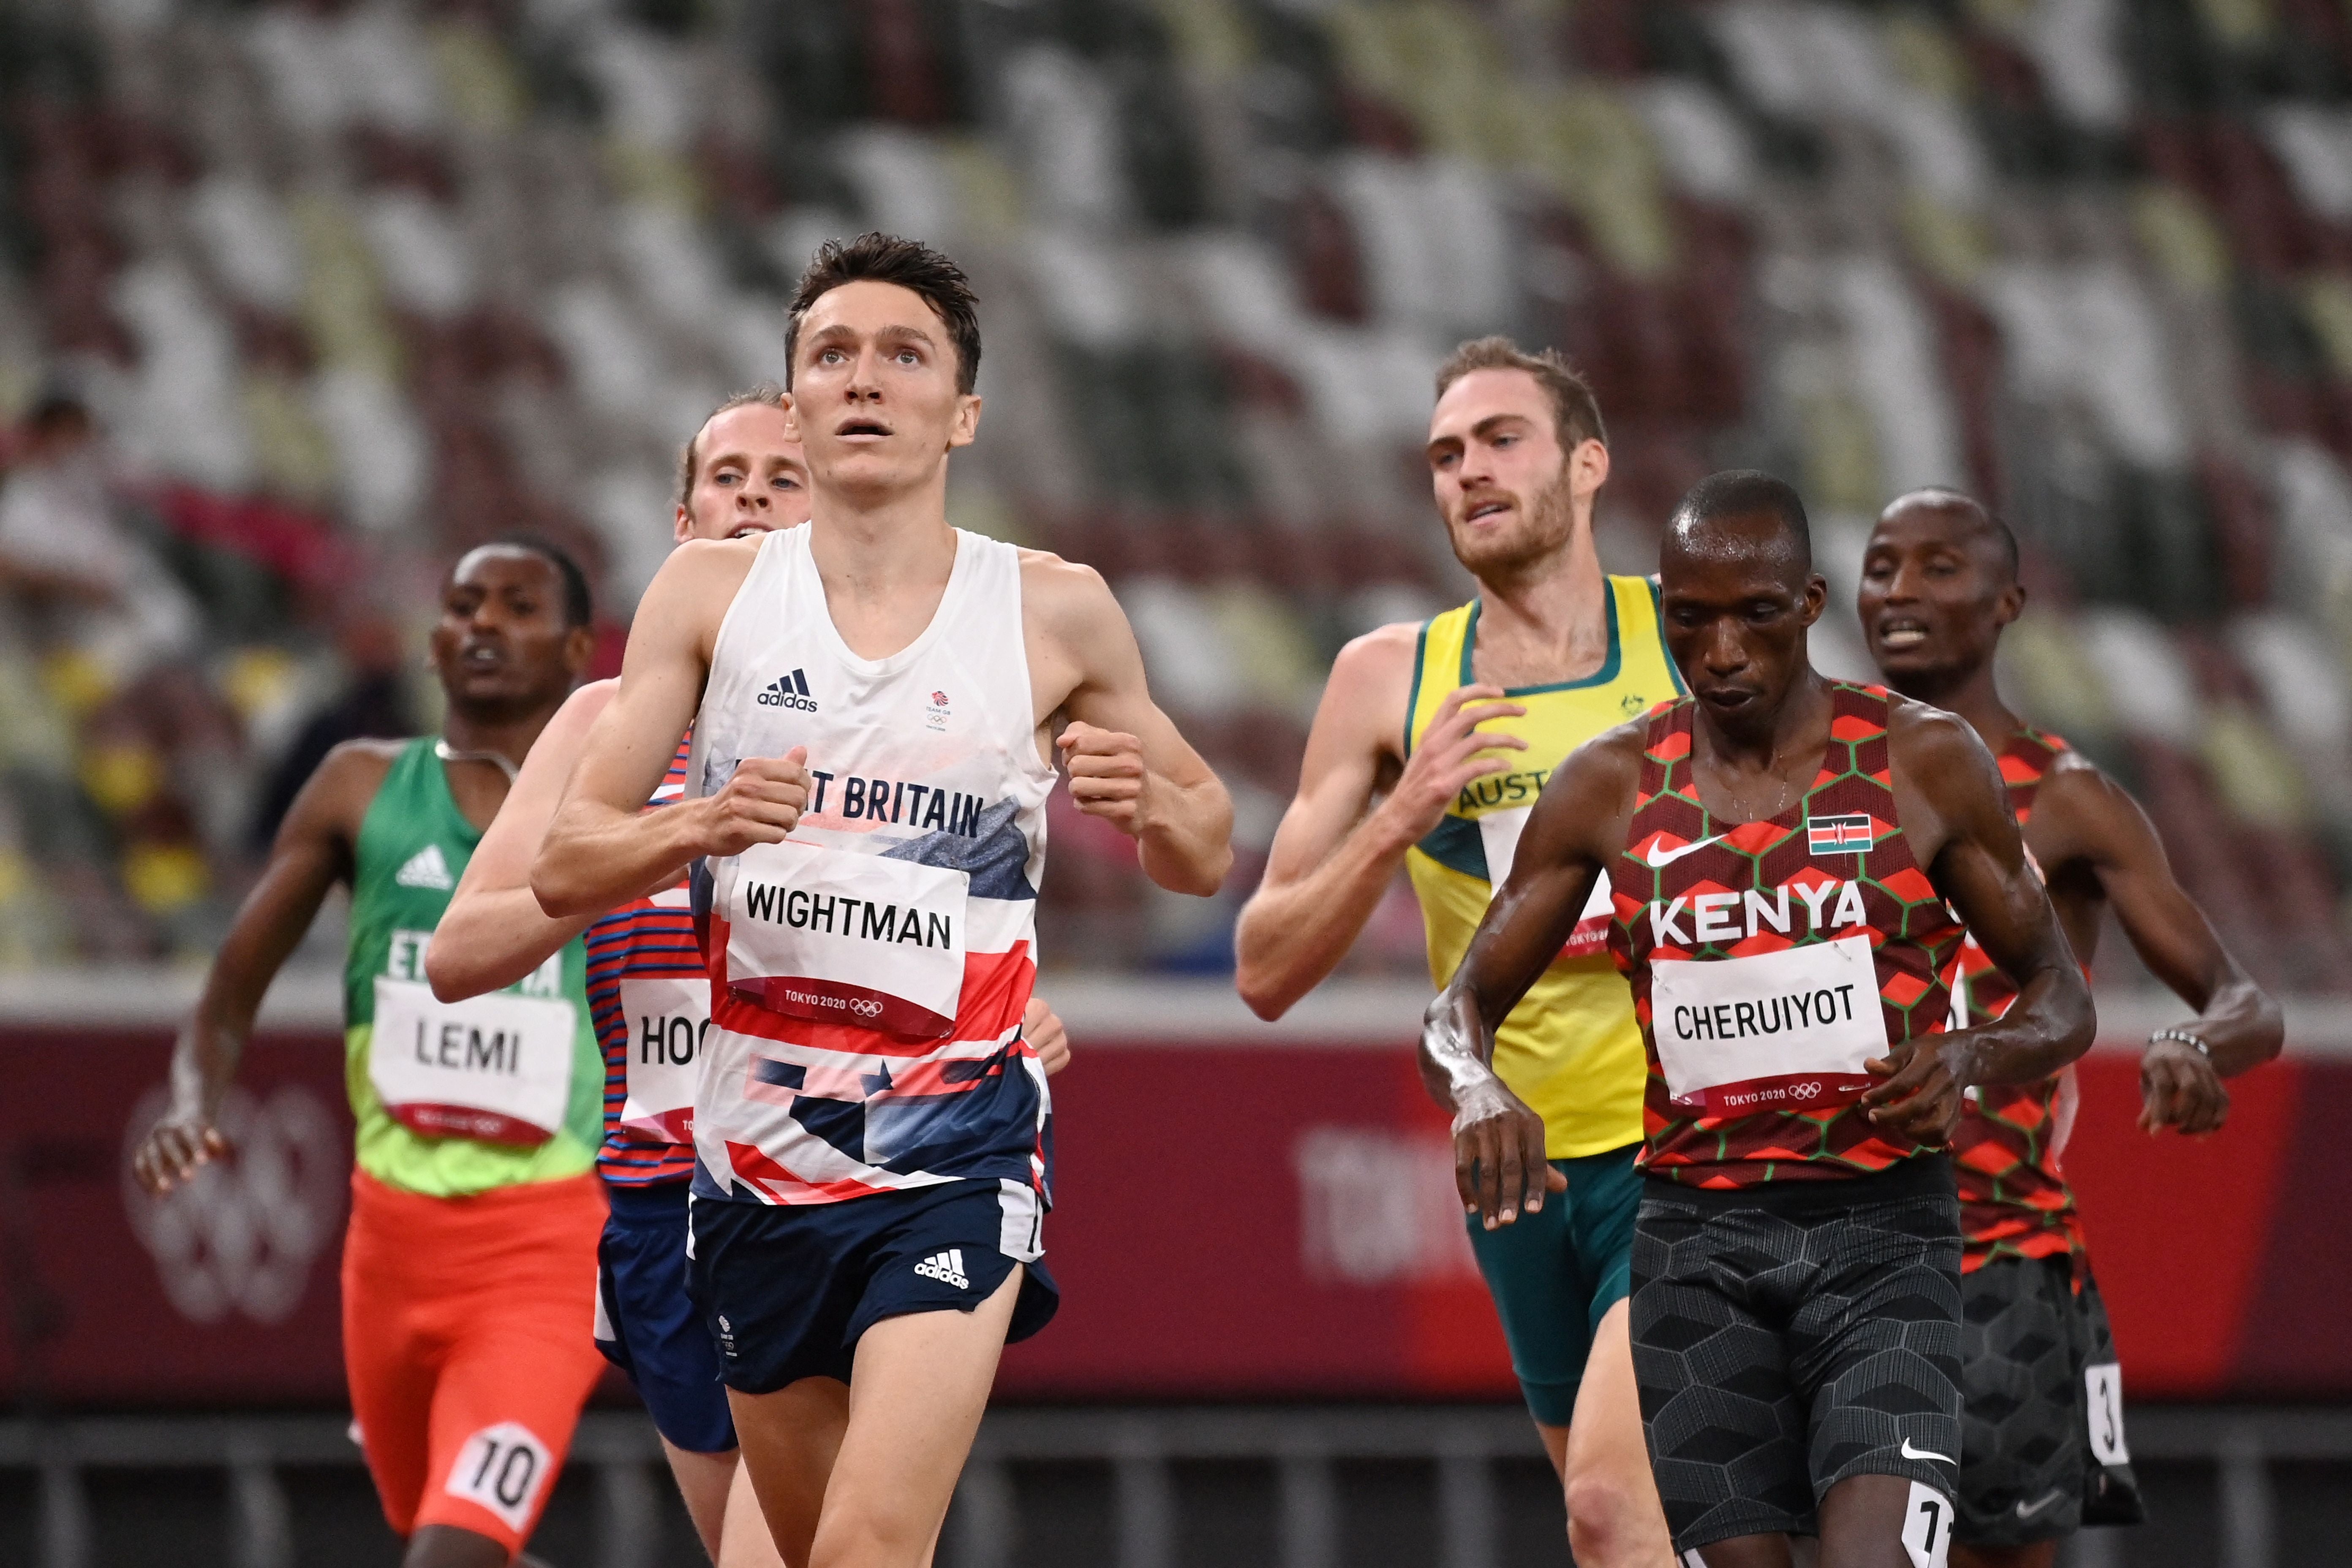 Britain's Jake Wightman crosses the finish line to win in the men's 1500m semi-finals